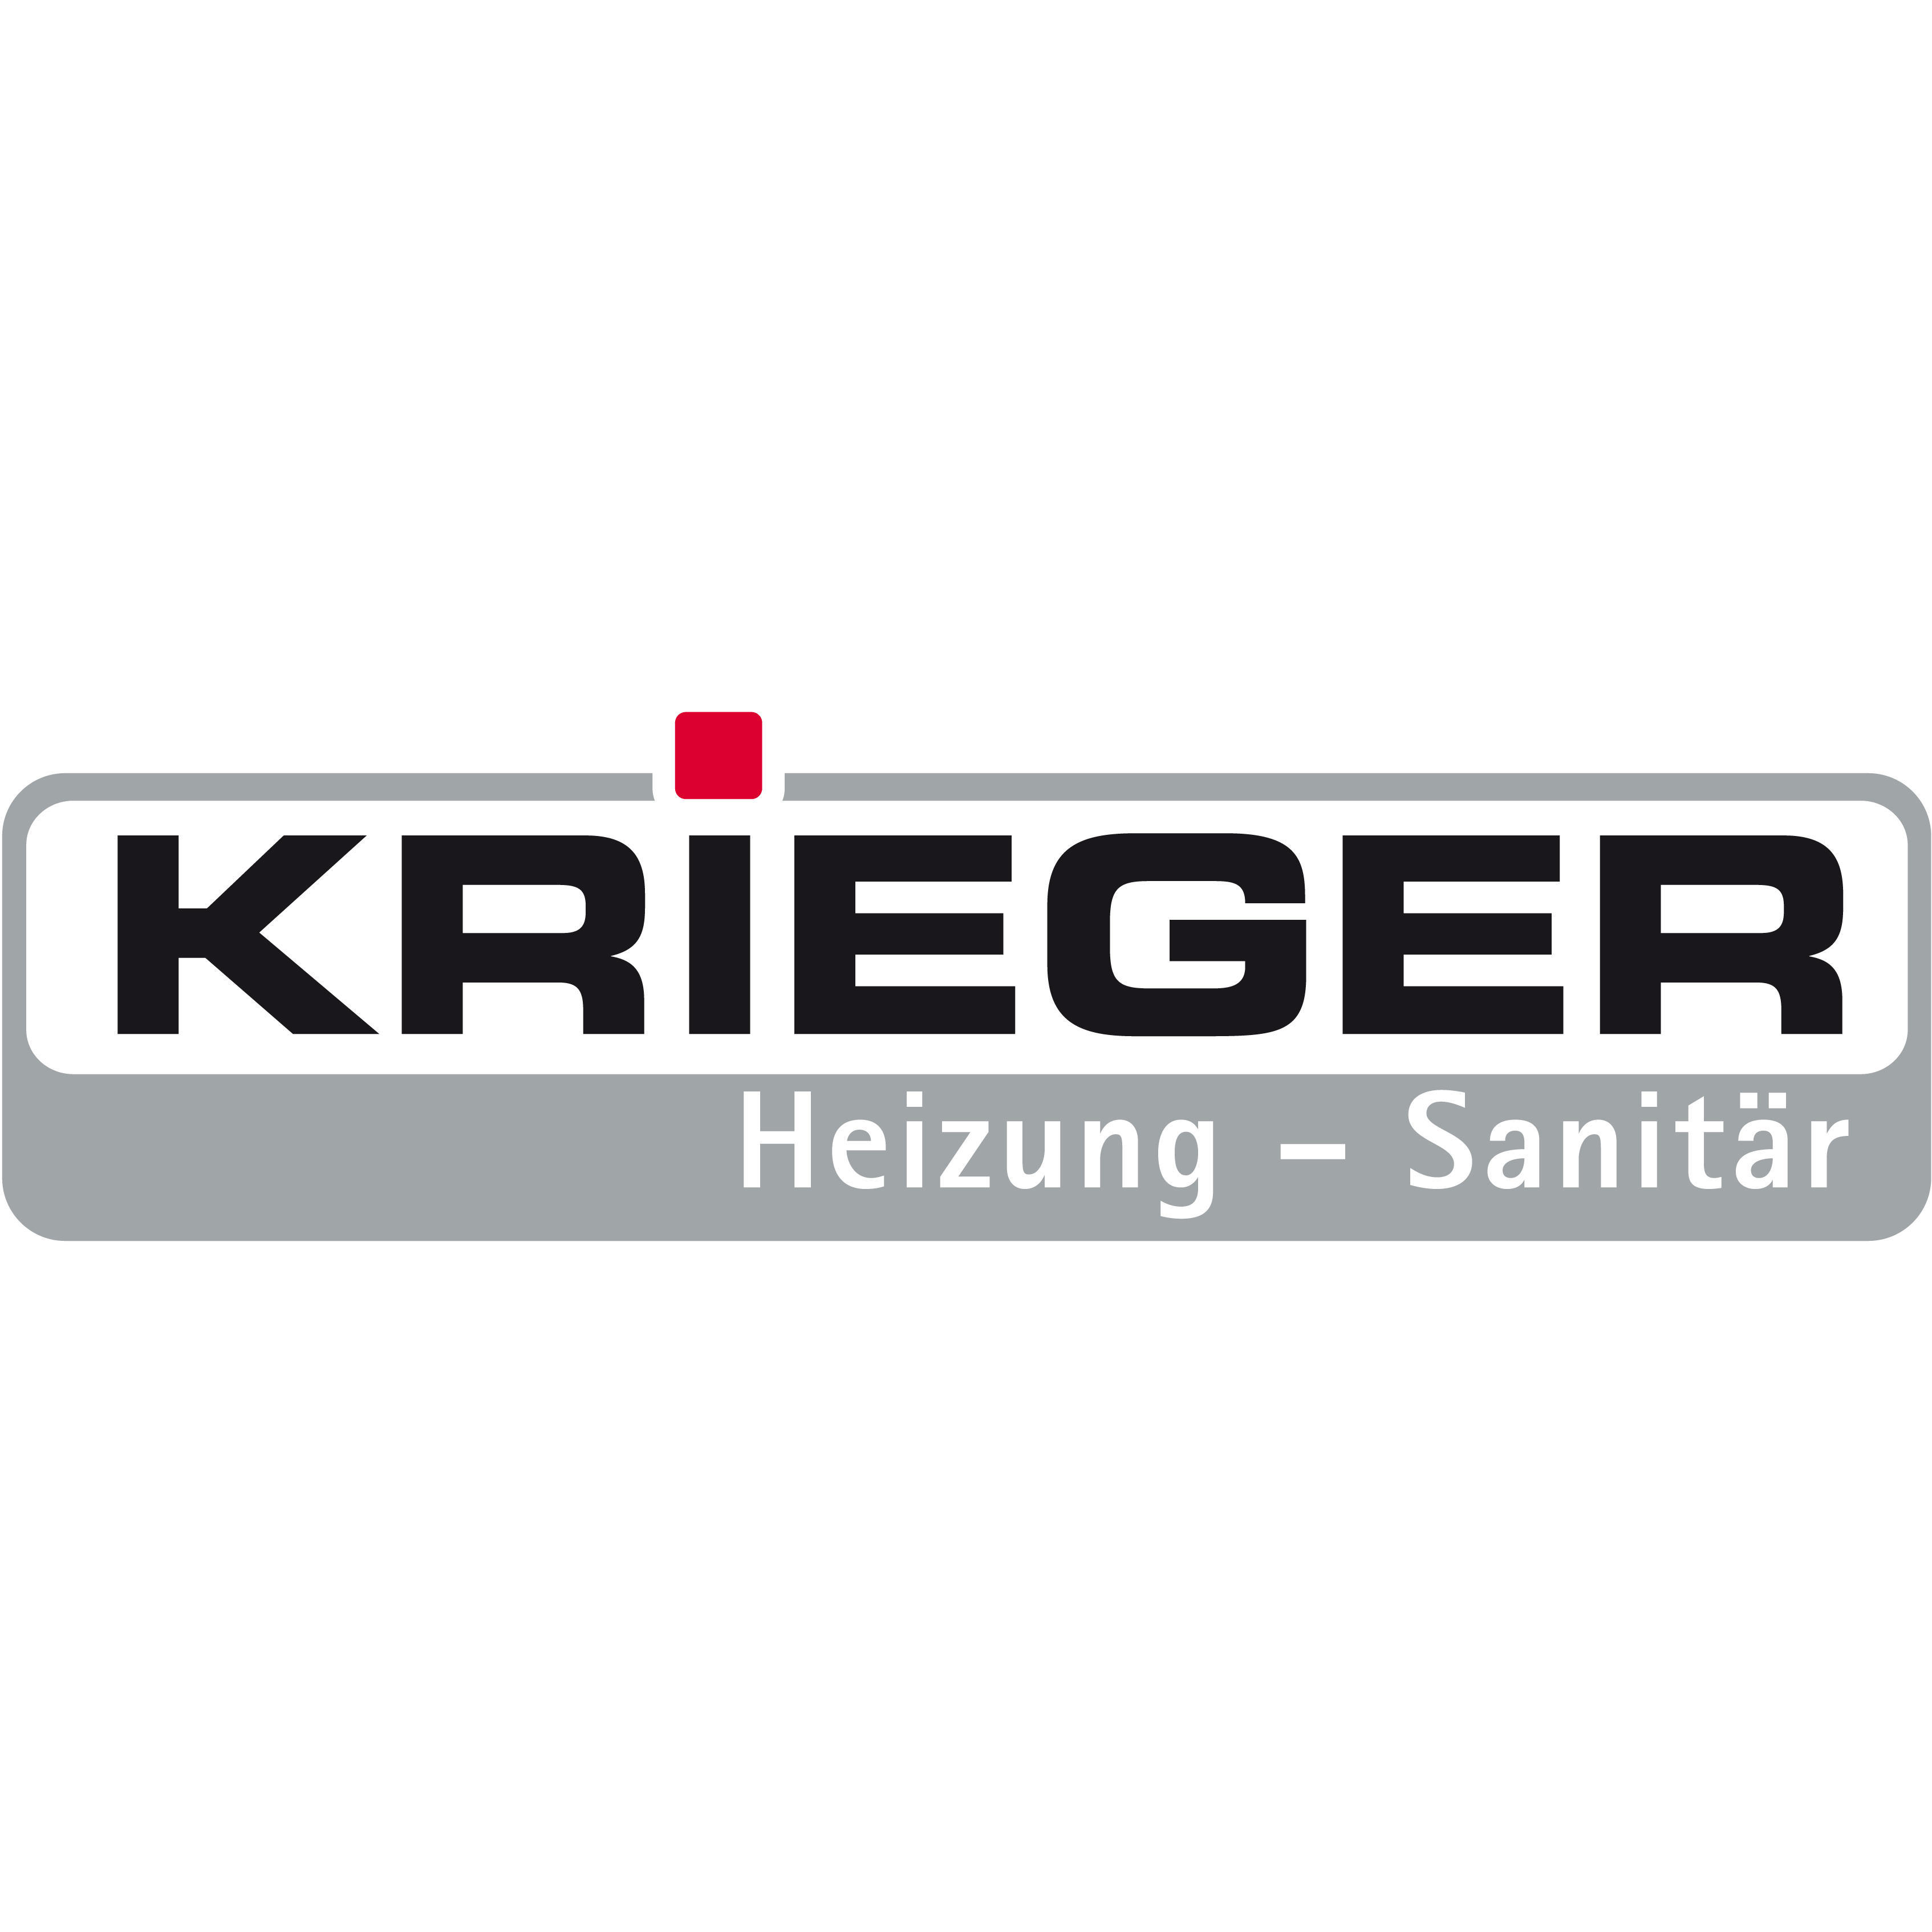 Krieger Heizung-Sanitär GmbH & Co. KG in Aurach